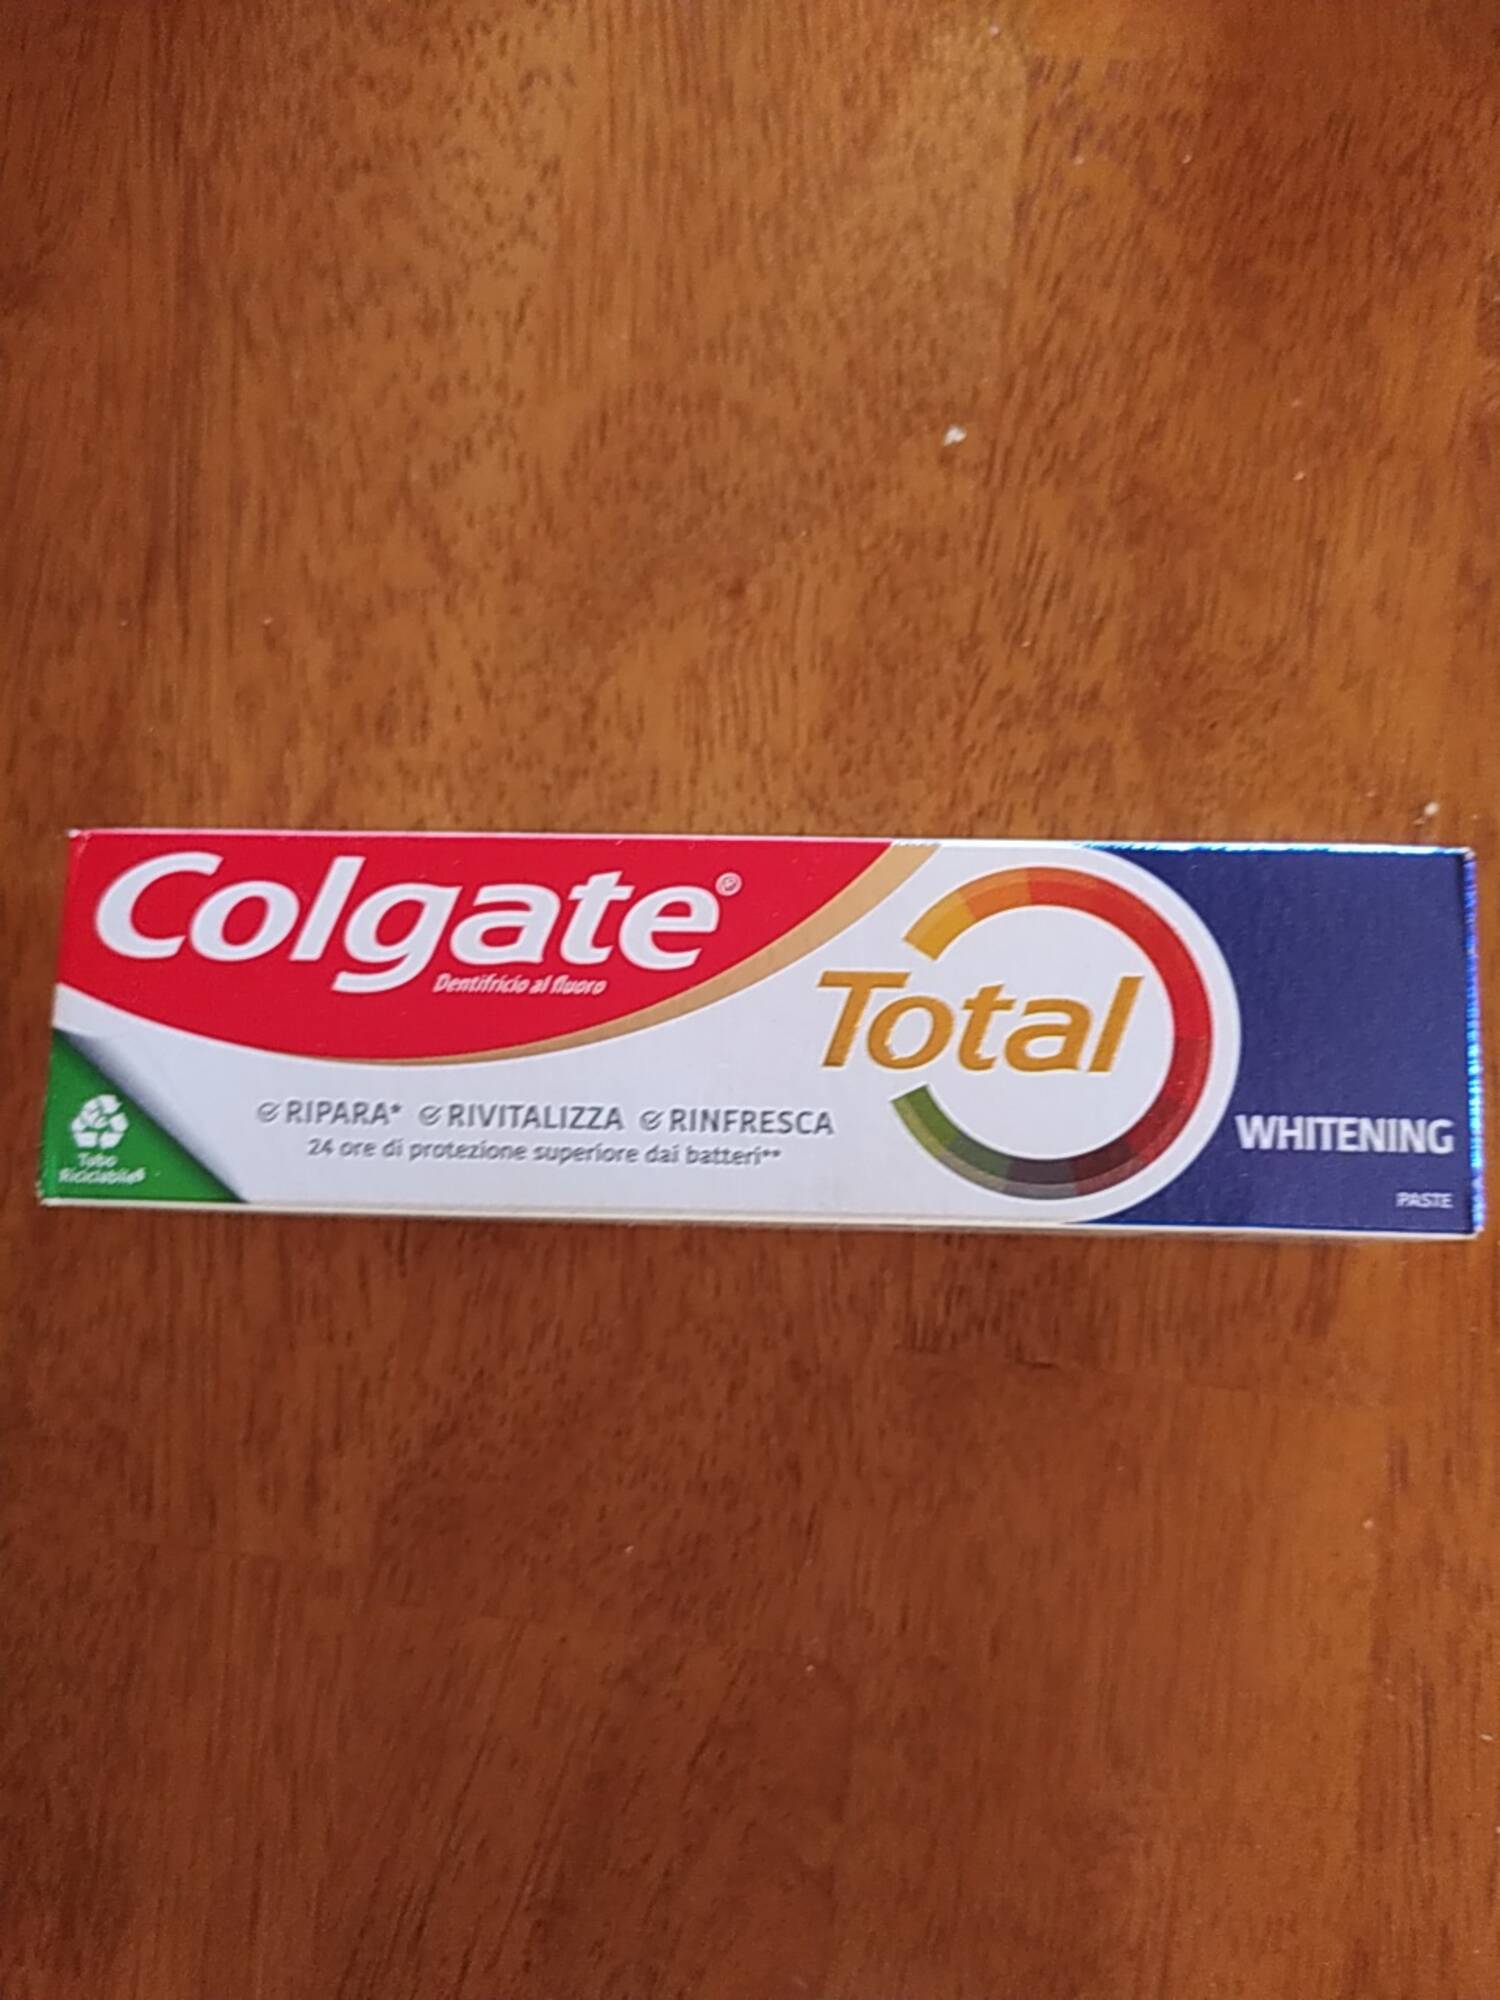 COLGATE - Total whitening - Dentifrice 